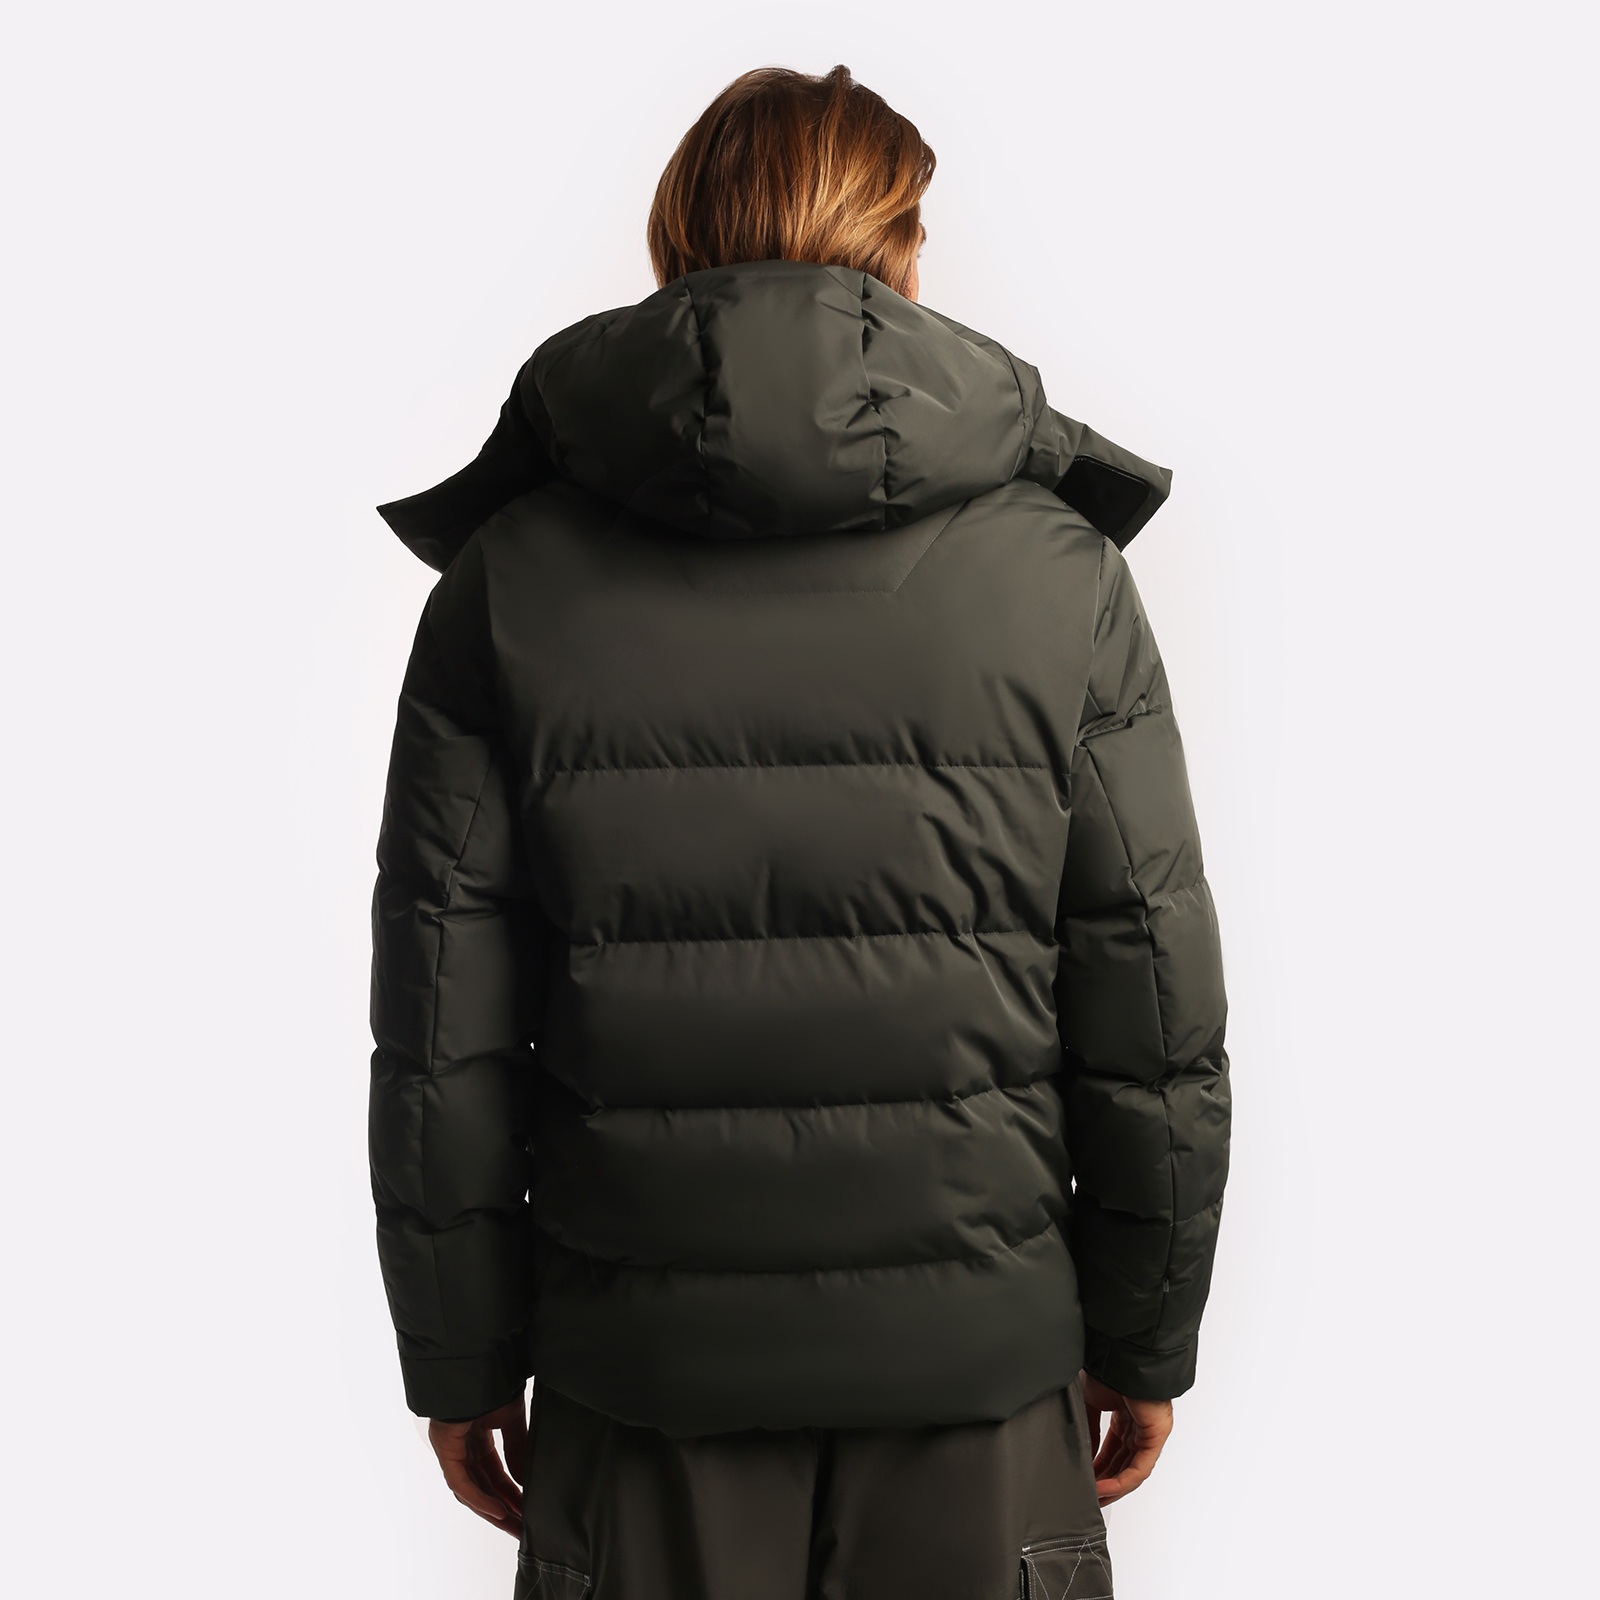 мужская куртка KRAKATAU Aitken   (Qm440-52 ел-серый)  - цена, описание, фото 2